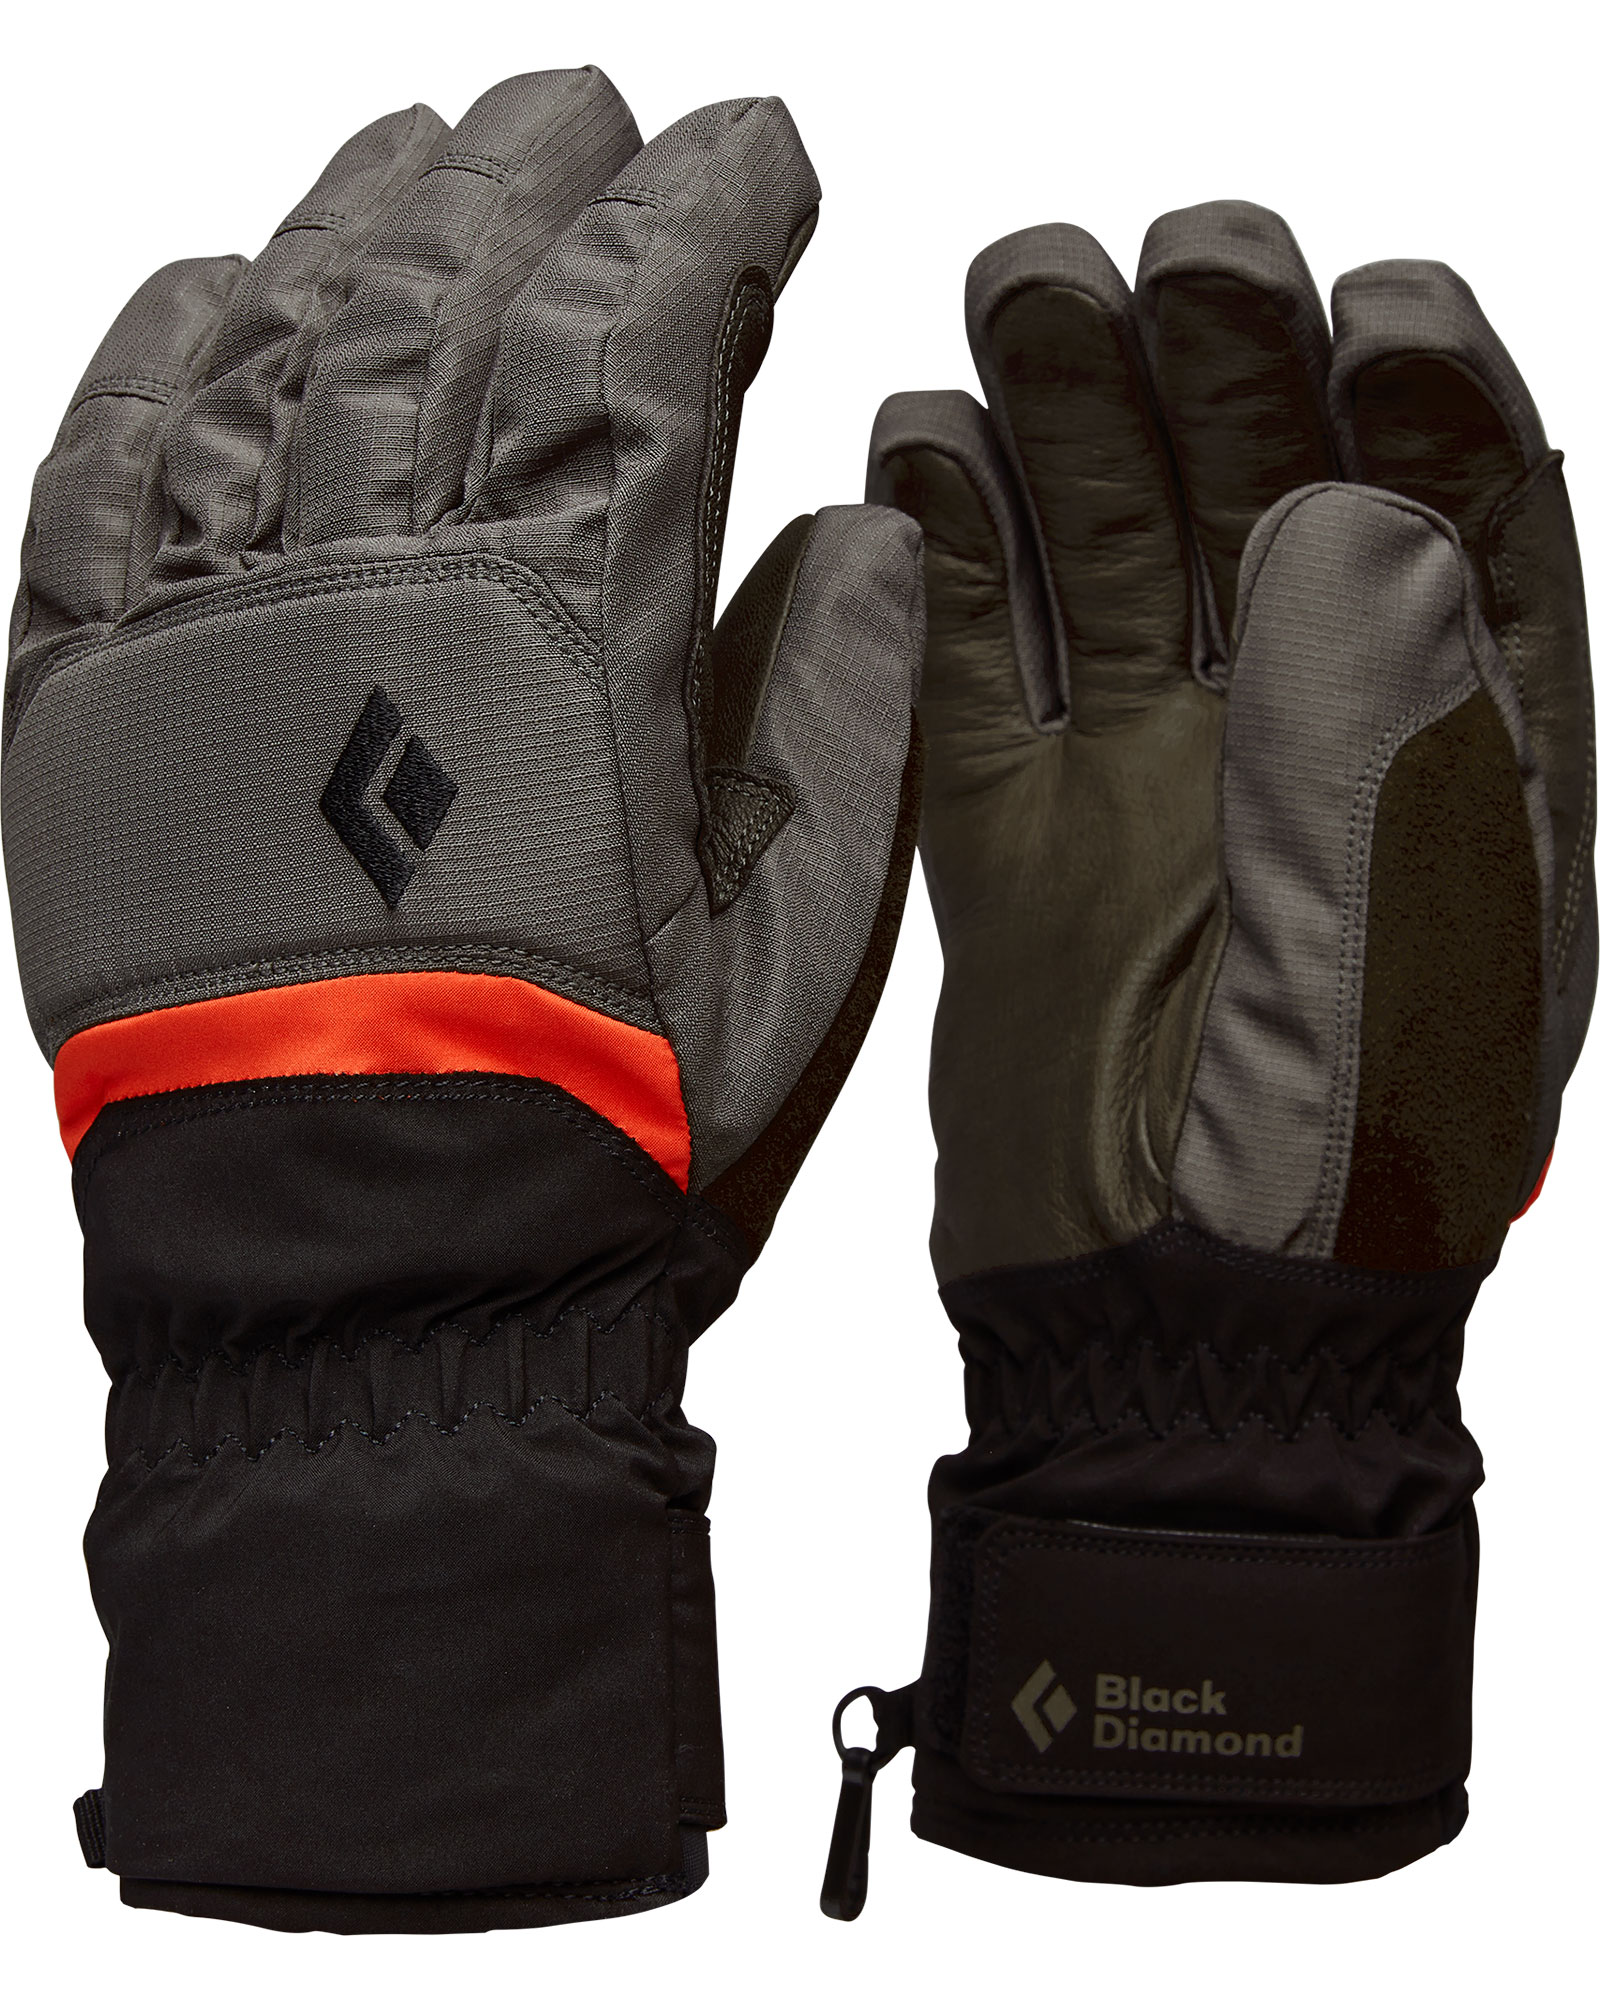 Black Diamond Mission GORE-TEX Men's Gloves